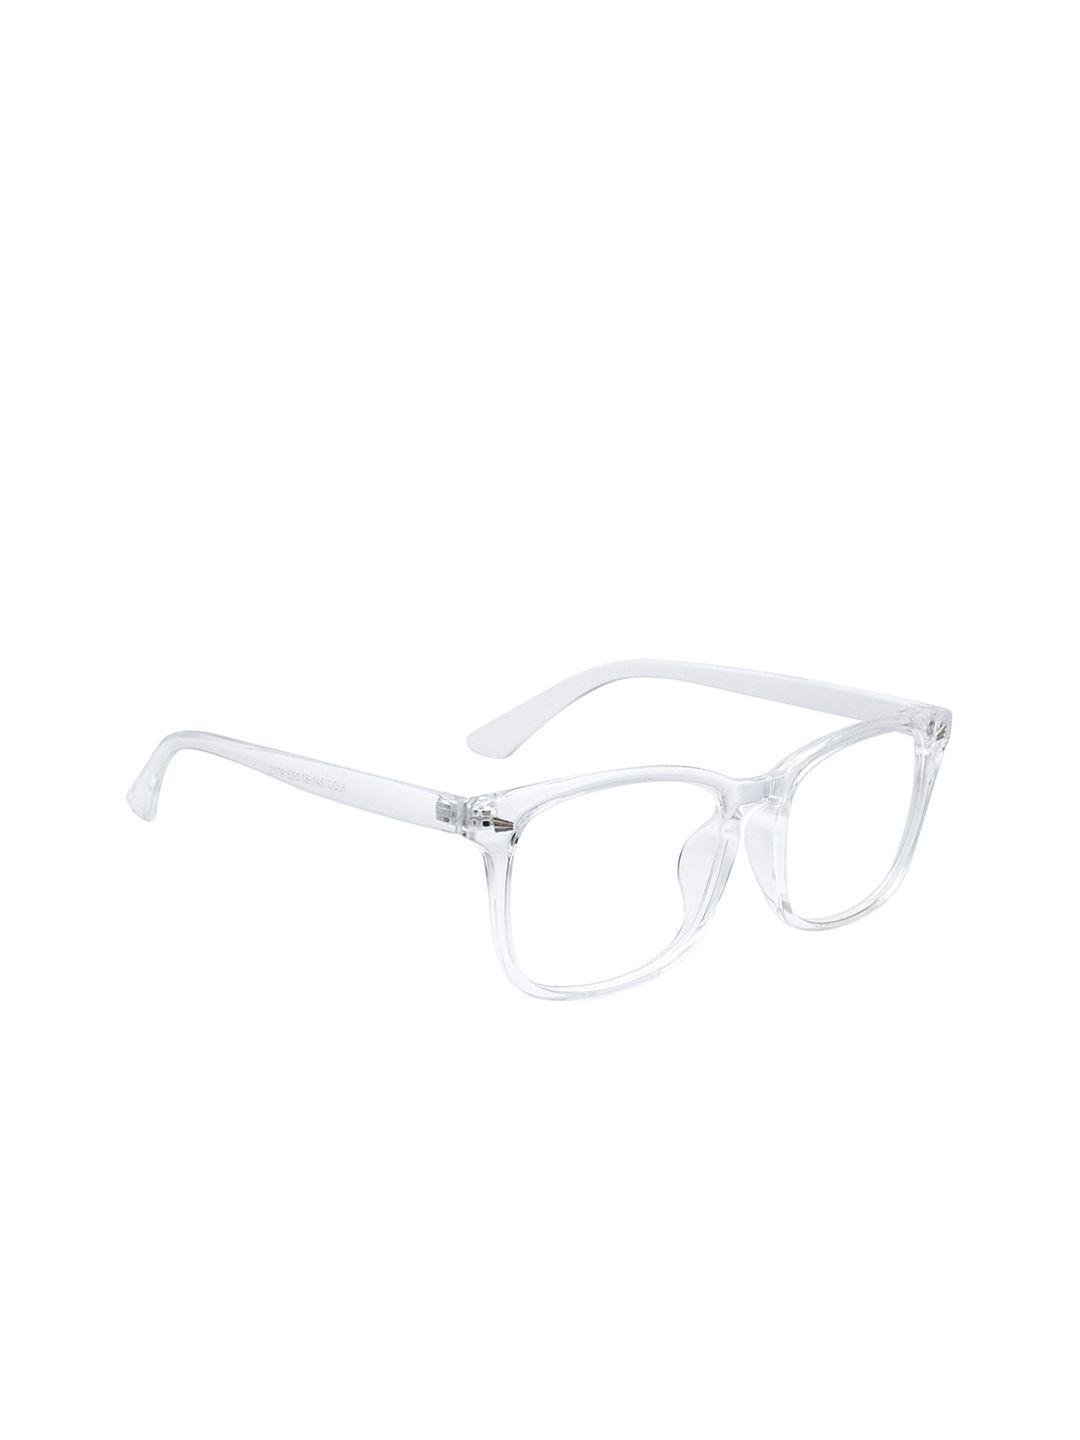 peter-jones-eyewear-unisex-transparent-full-rim-square-frames